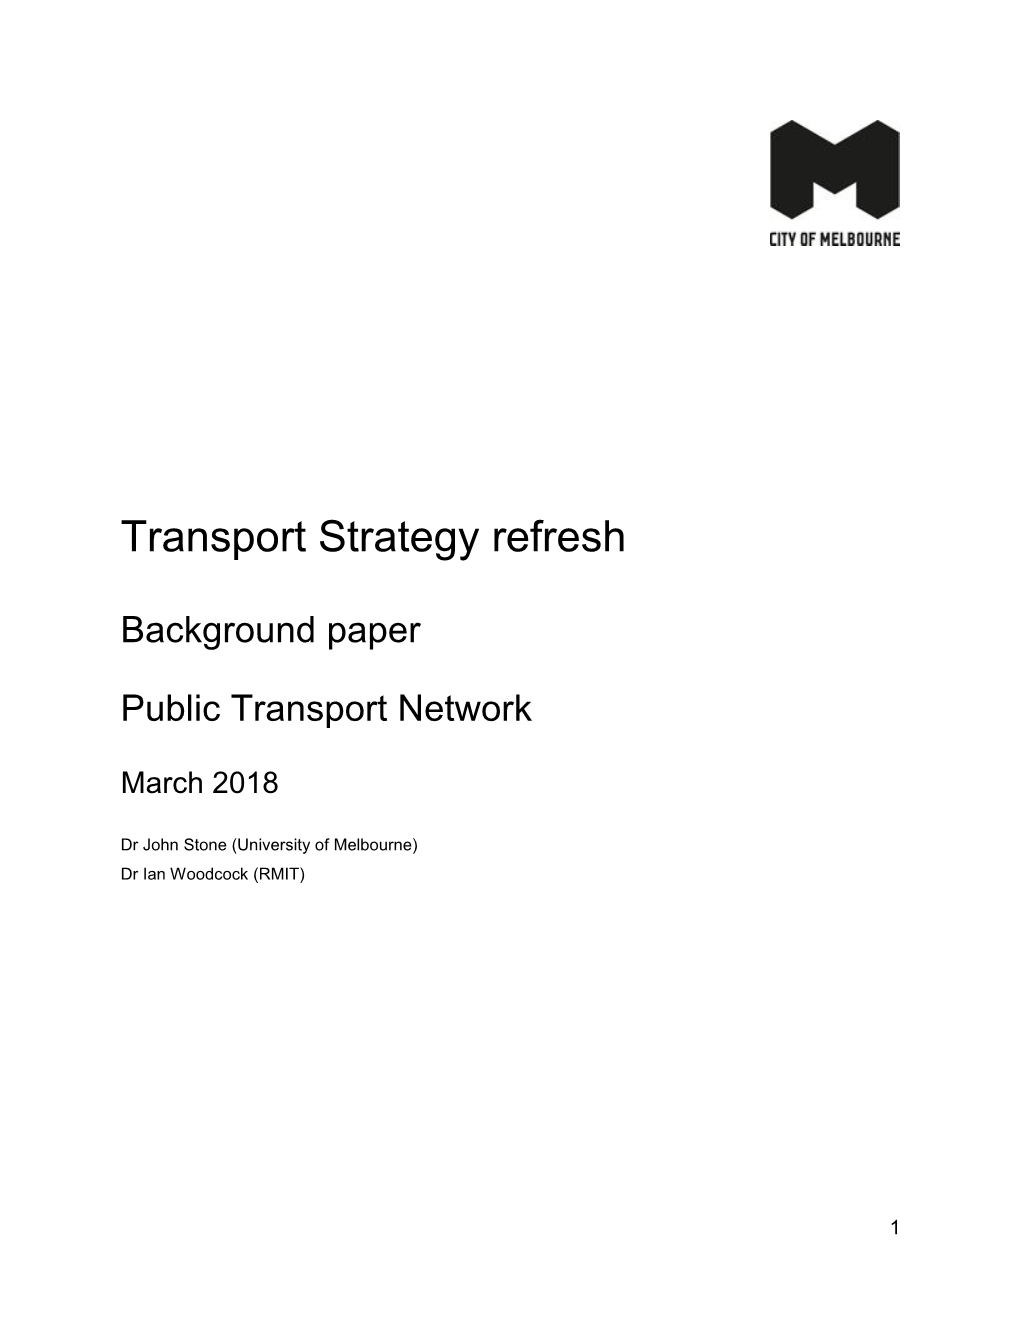 Transport Strategy Refresh